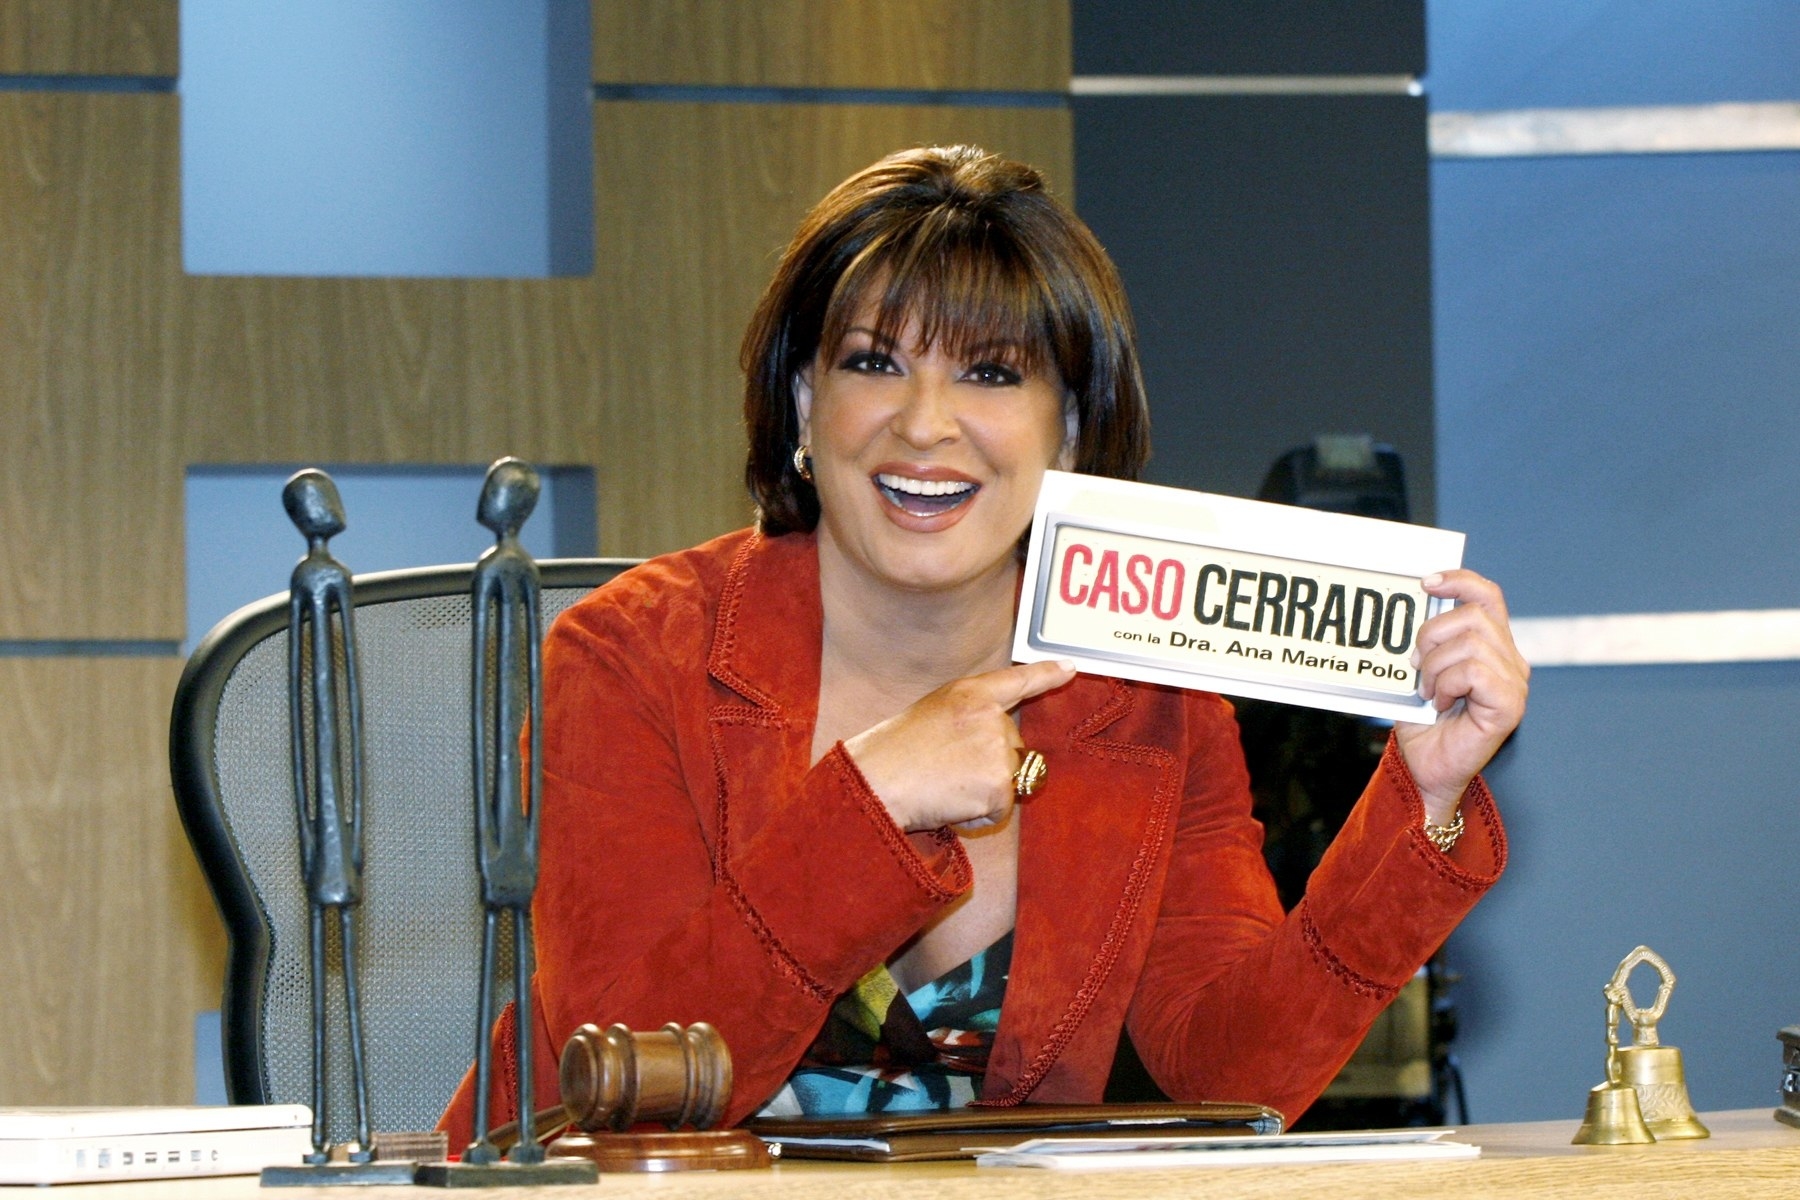 Doctora Ana Maria Polo pointing at a sign that reads Caso Cerrado